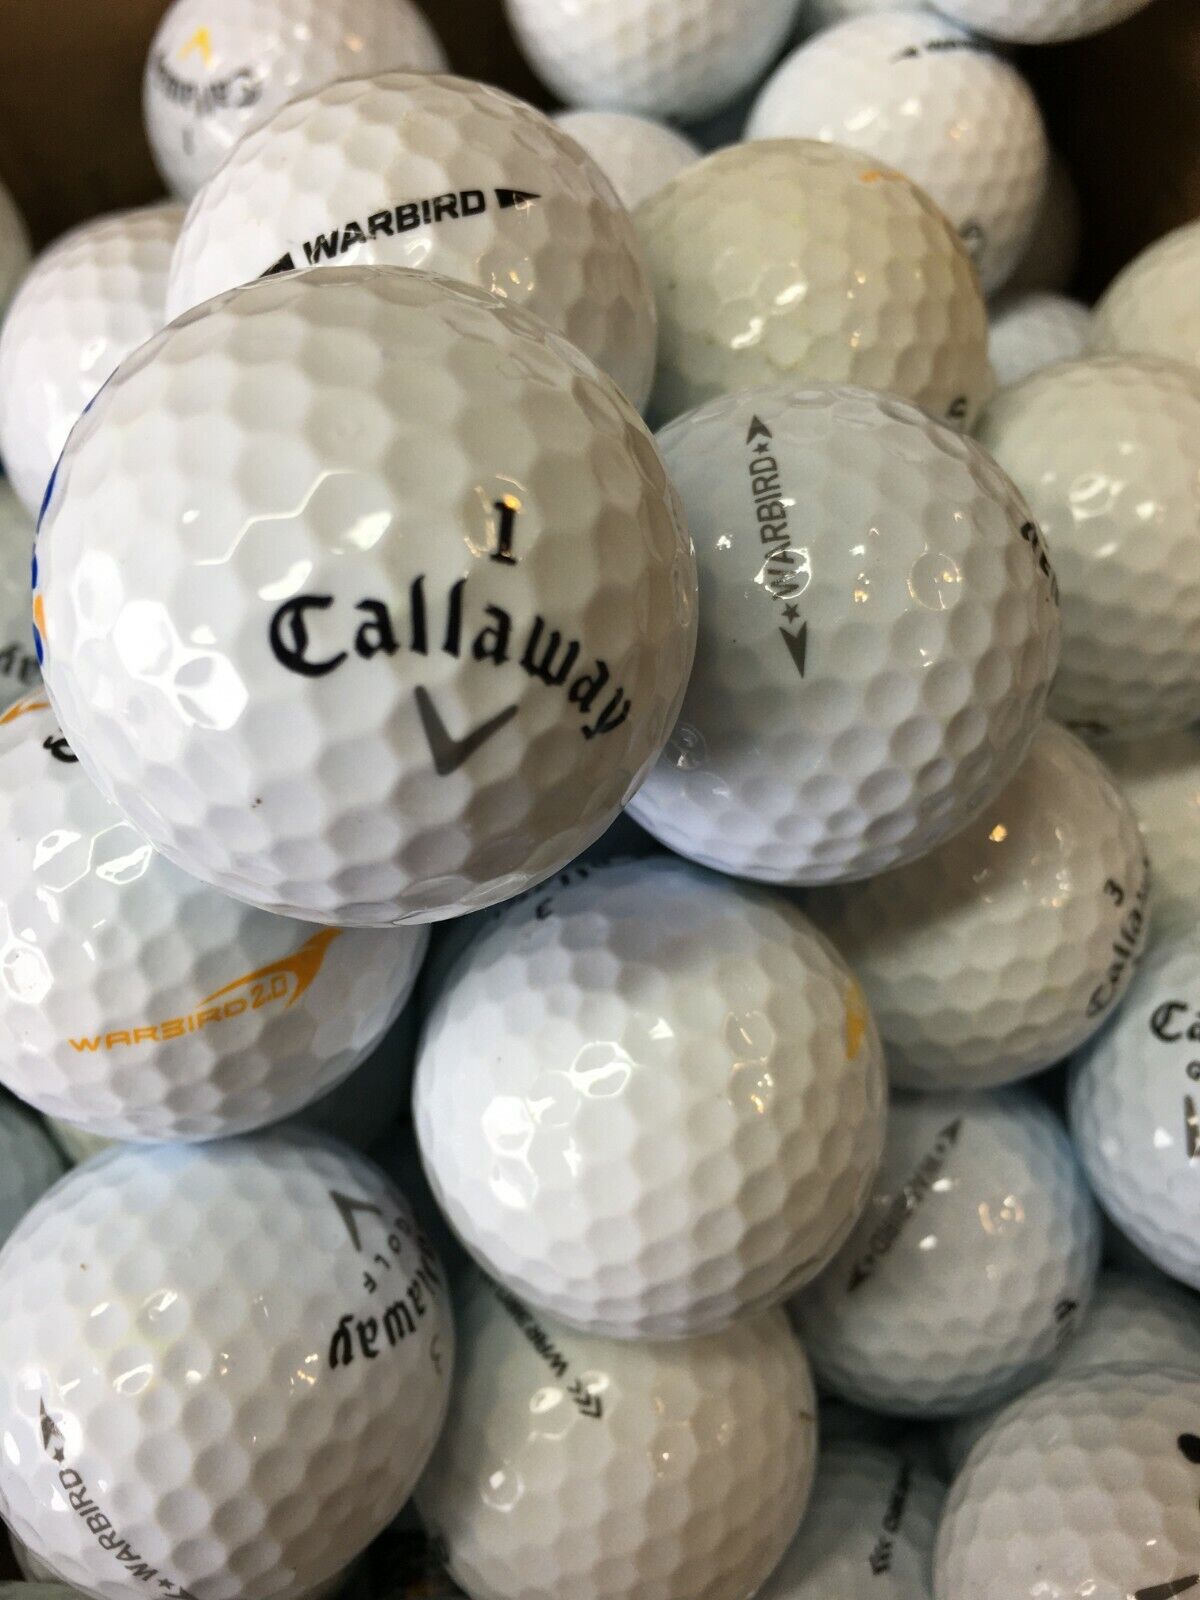 Callaway Warbird/Warbird Plus.....50 Premium AAA Used Golf Balls